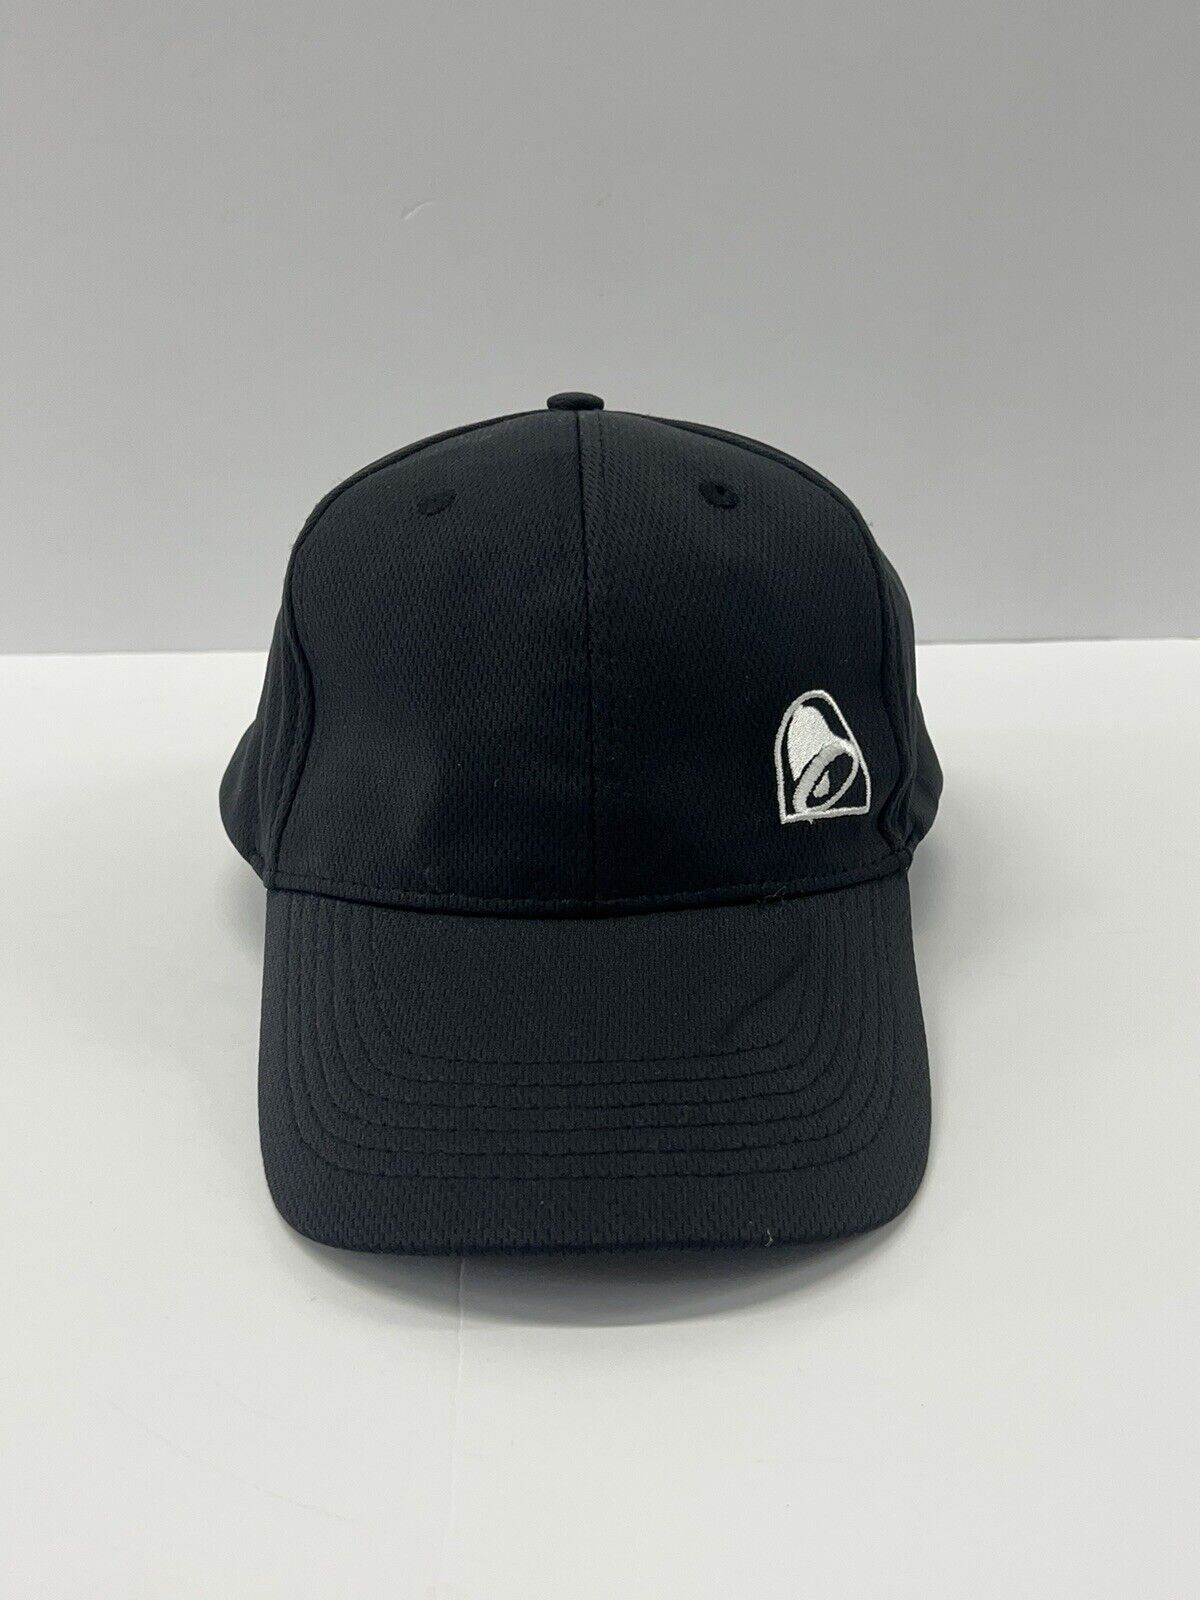 Authentic Taco Bell Employee Uniform BaseBall Hat Cap One Size Black Unisex